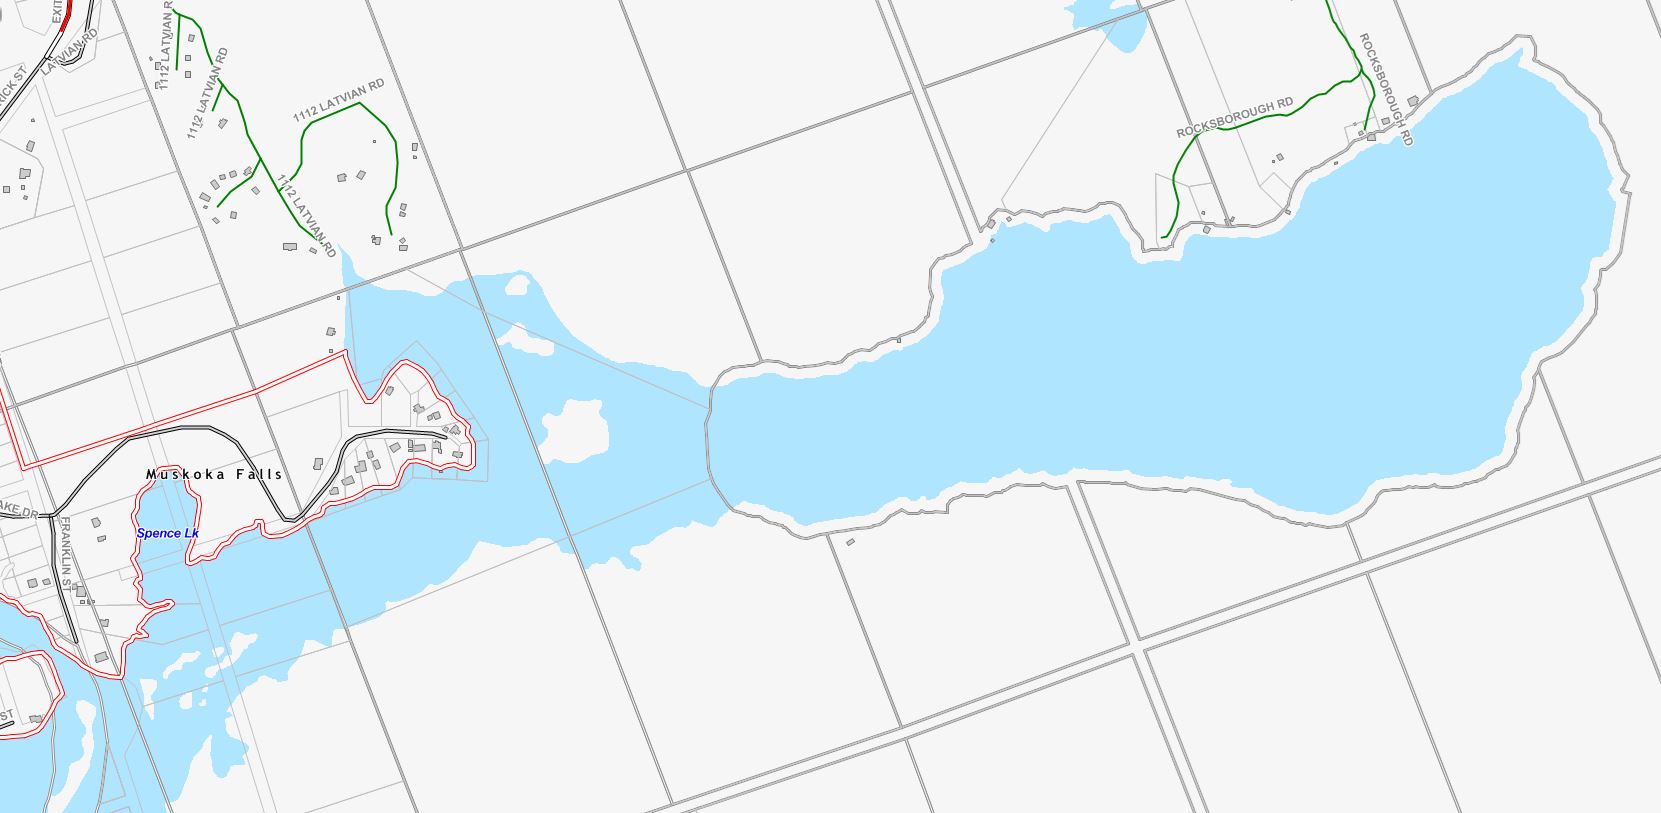 Spence Lake Cadastral Map - Spence Lake - Muskoka